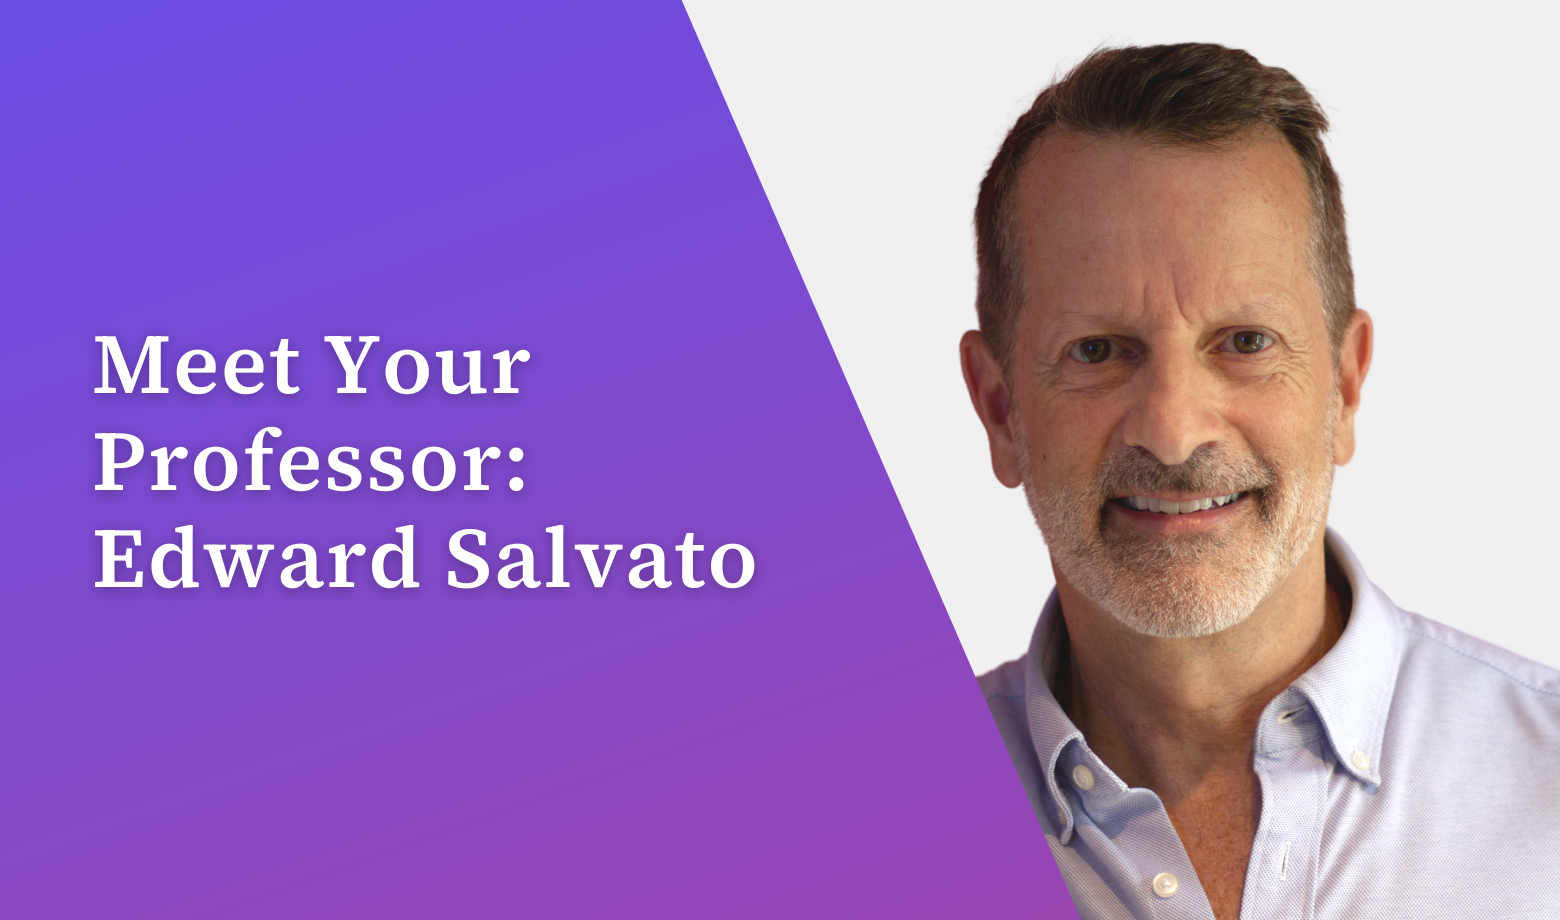 Meet Your Professor: Edward Salvato